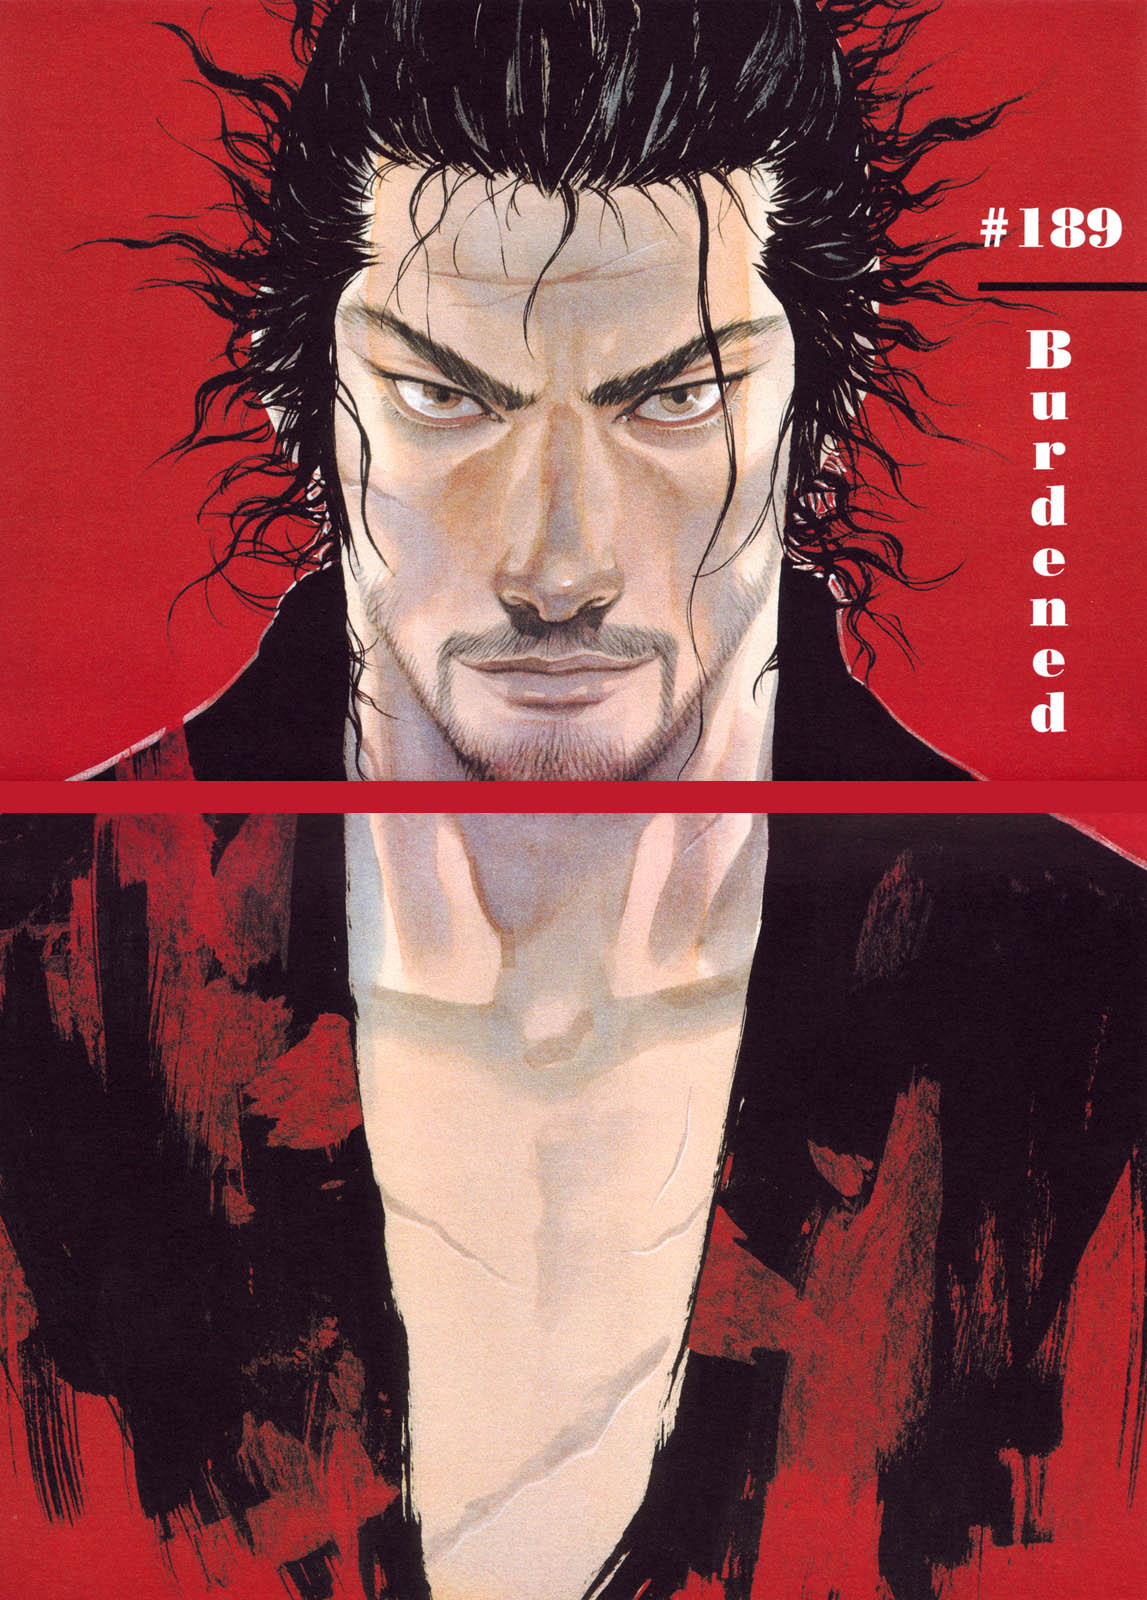 Miyamoto Musashi on Takehiko Inoue's cover page to Vagabond Ch. 189 "Burdened" (2006), Kodansha via digital issue 